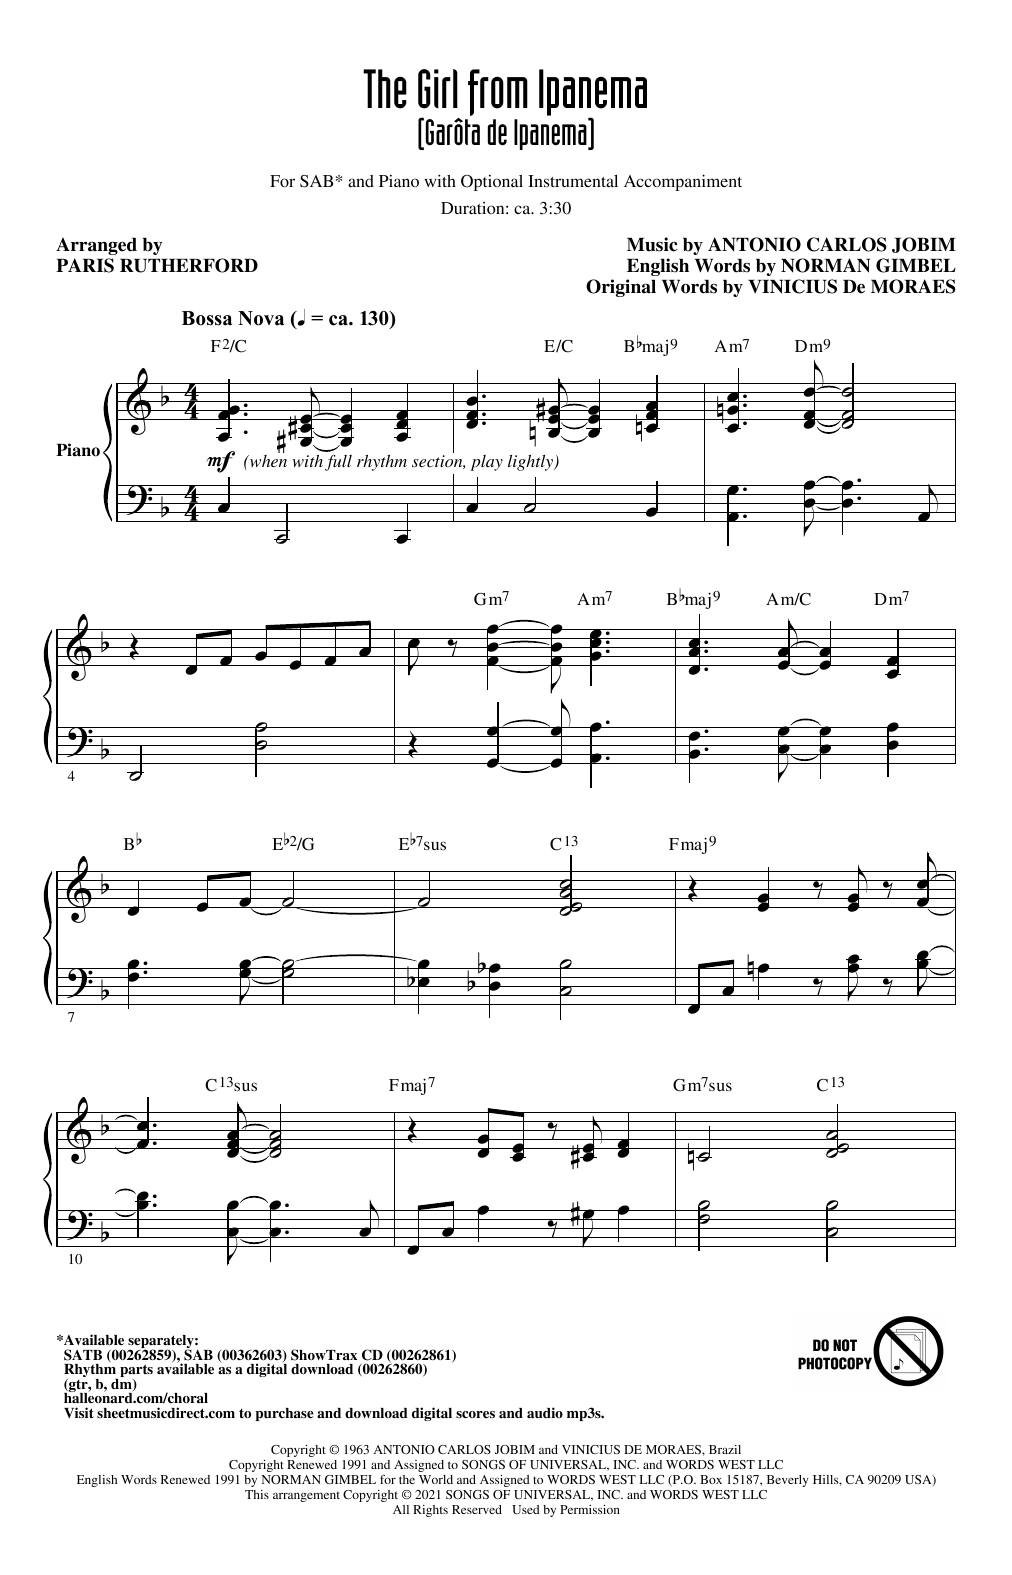 Download Antonio Carlos Jobim The Girl from Ipanema (Garôta de Ipanema) (arr. Paris Rutherford) Sheet Music and learn how to play SAB Choir PDF digital score in minutes